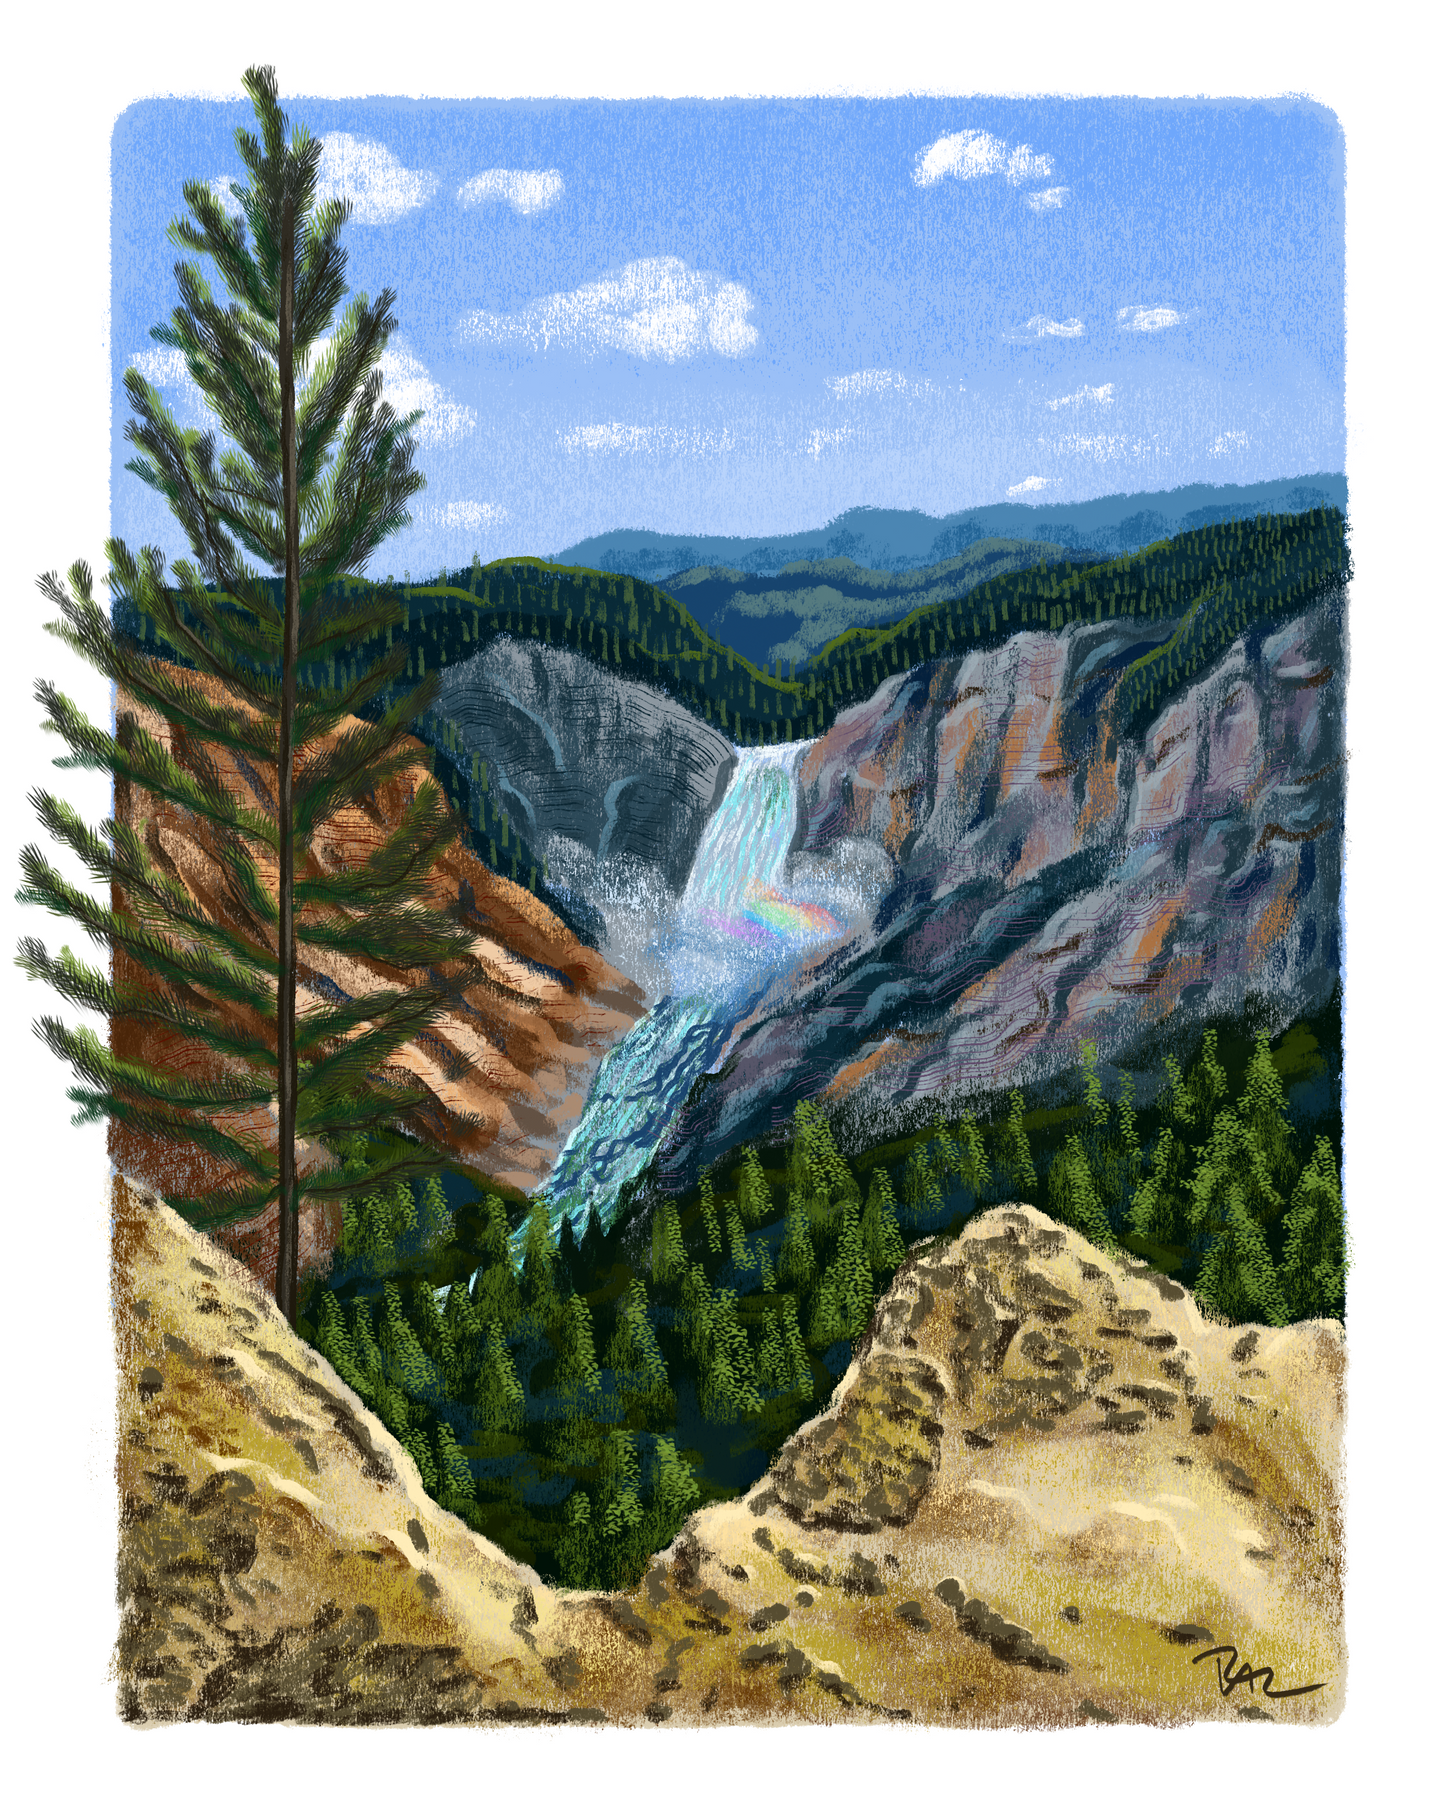 Yellowstone Postcard